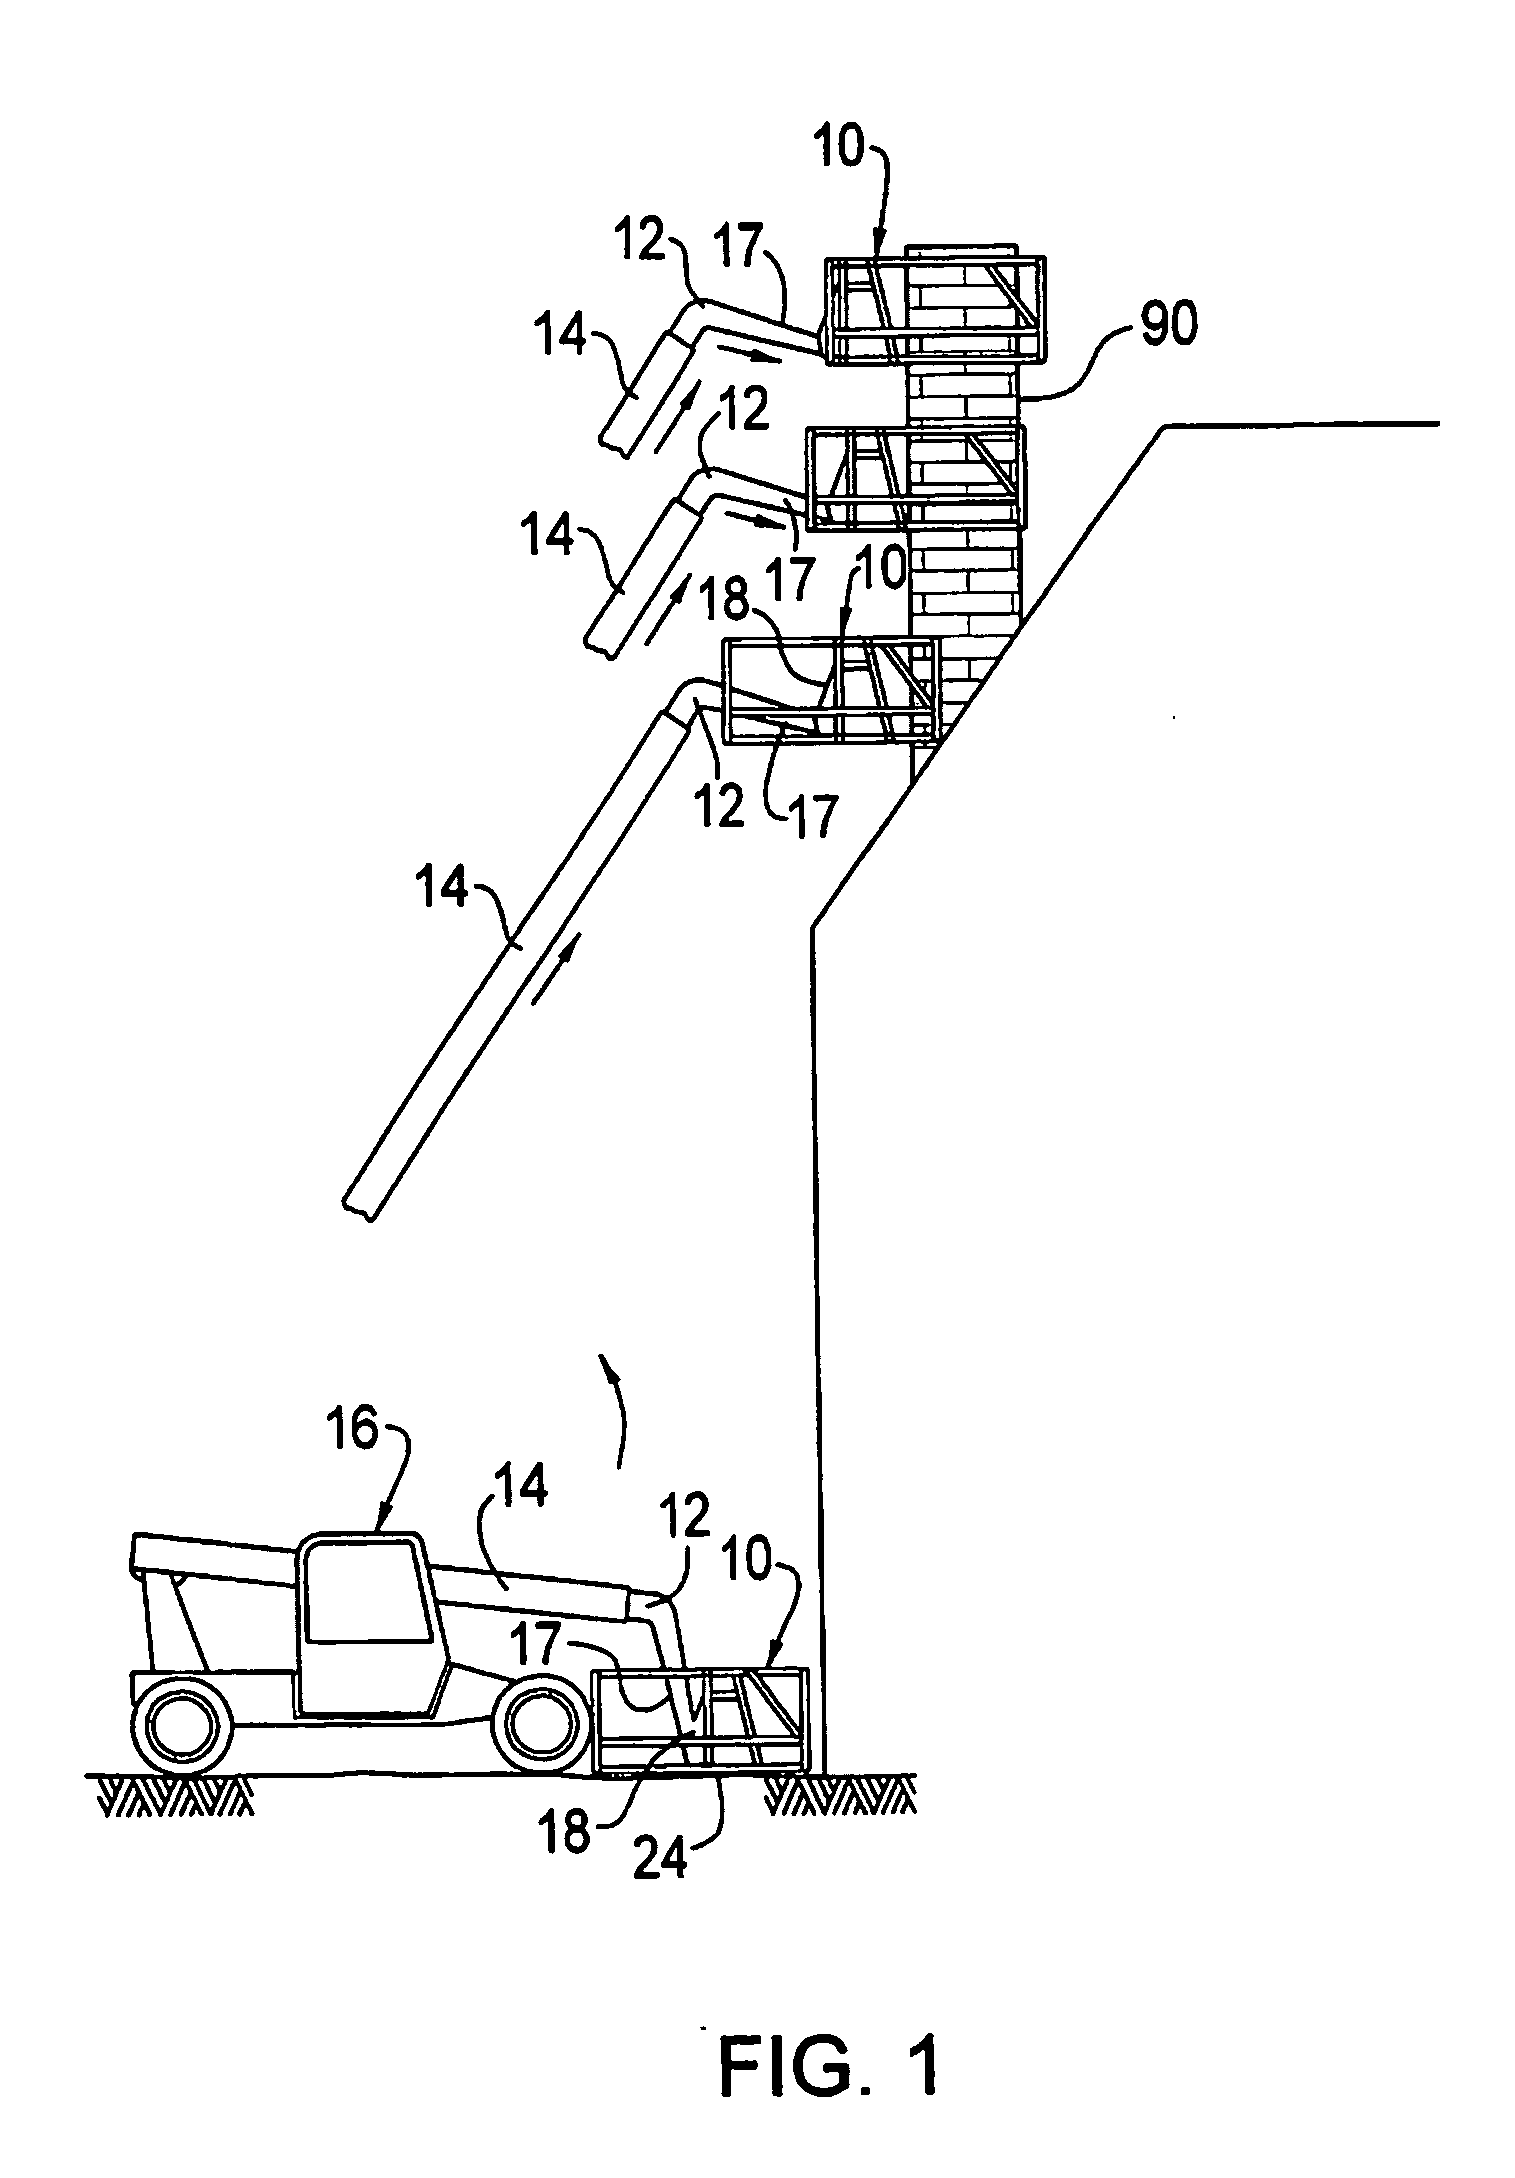 Mason's adjustable chimney-platform arrangement